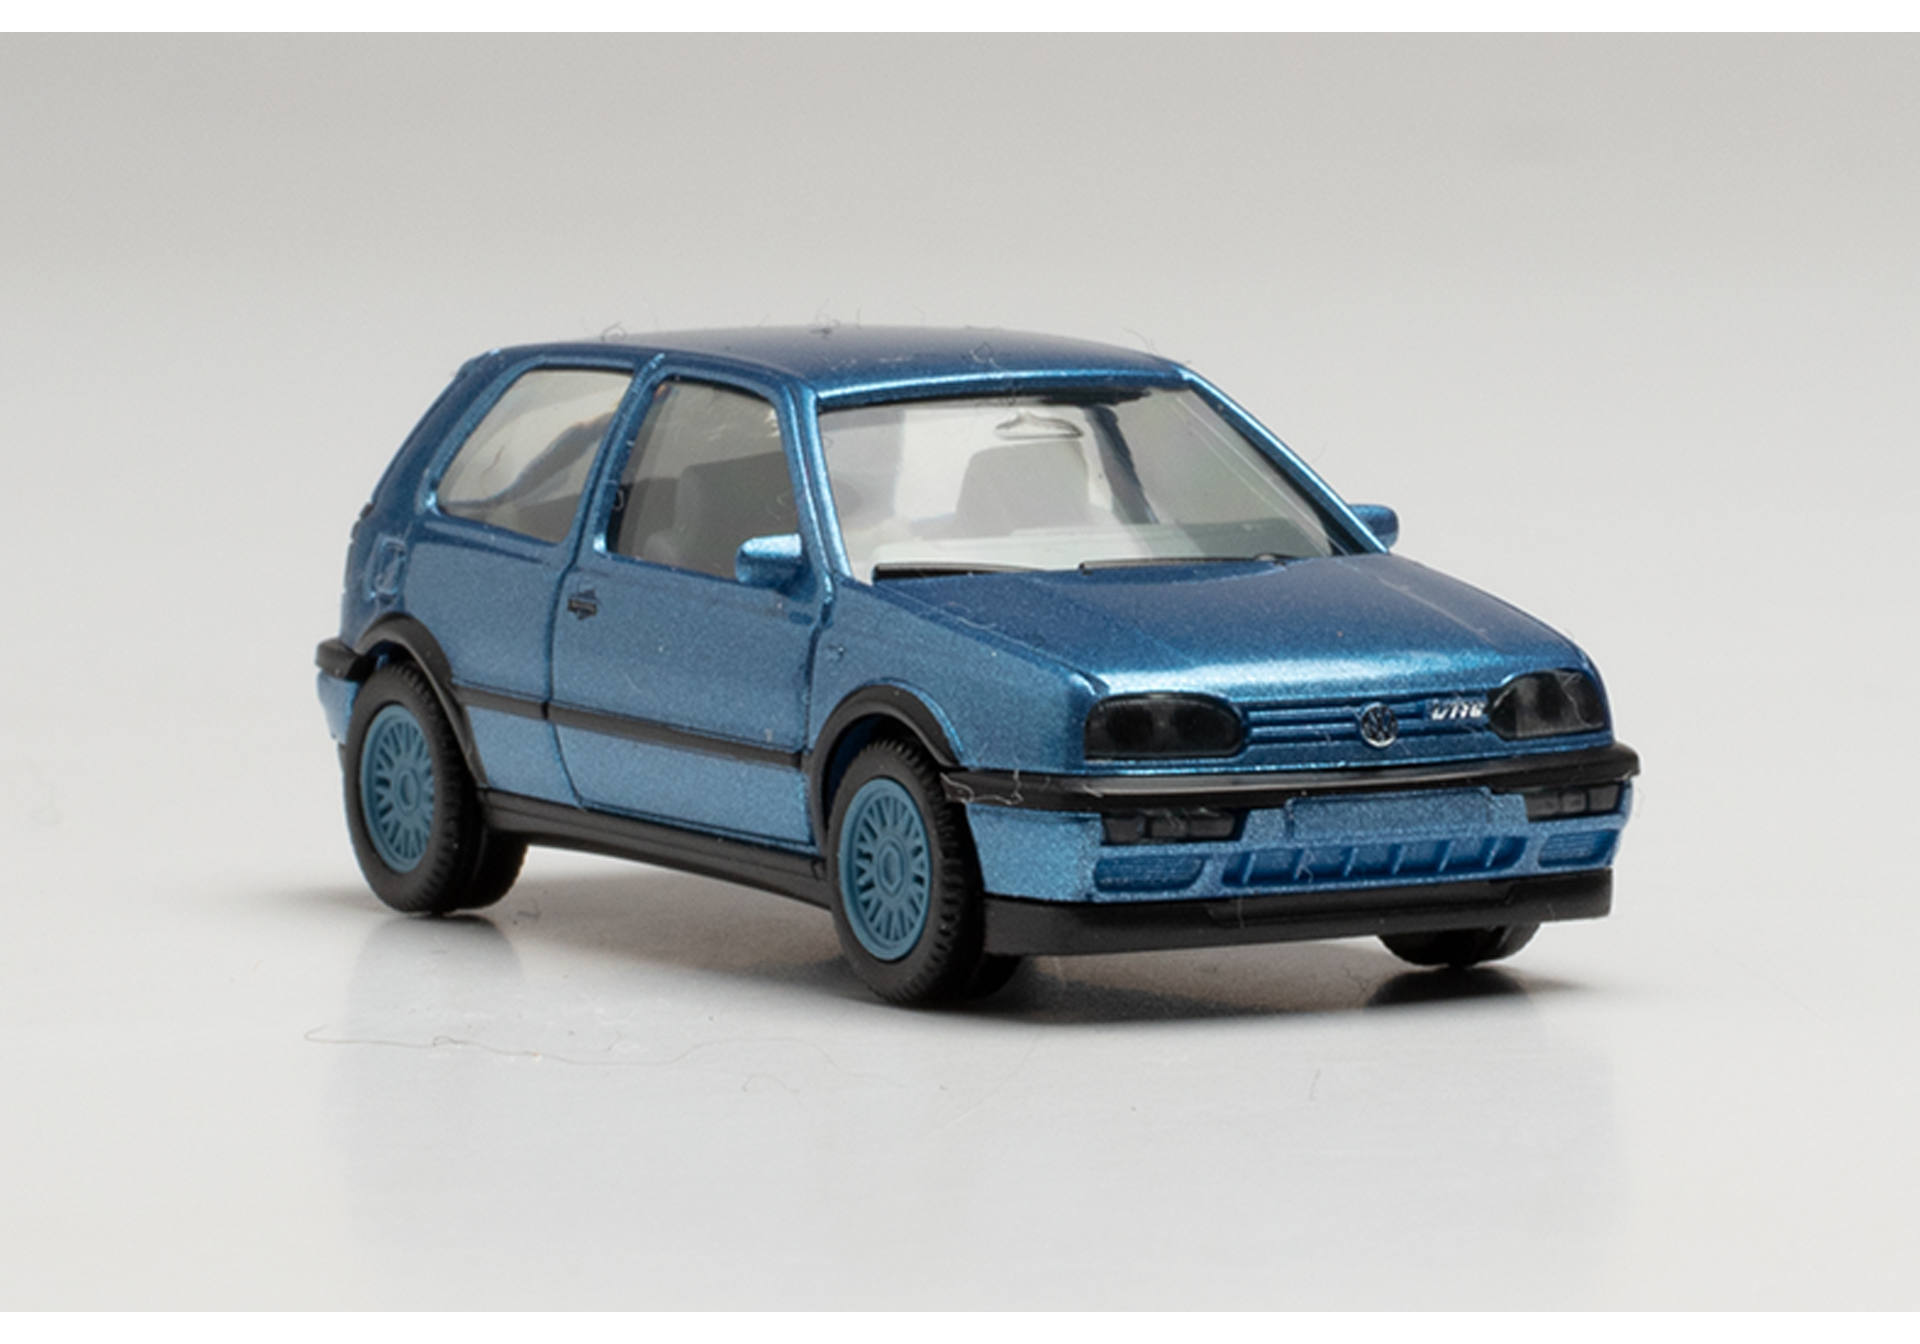 VW Golf III VR6 mit Felgen blau, blaumetallic